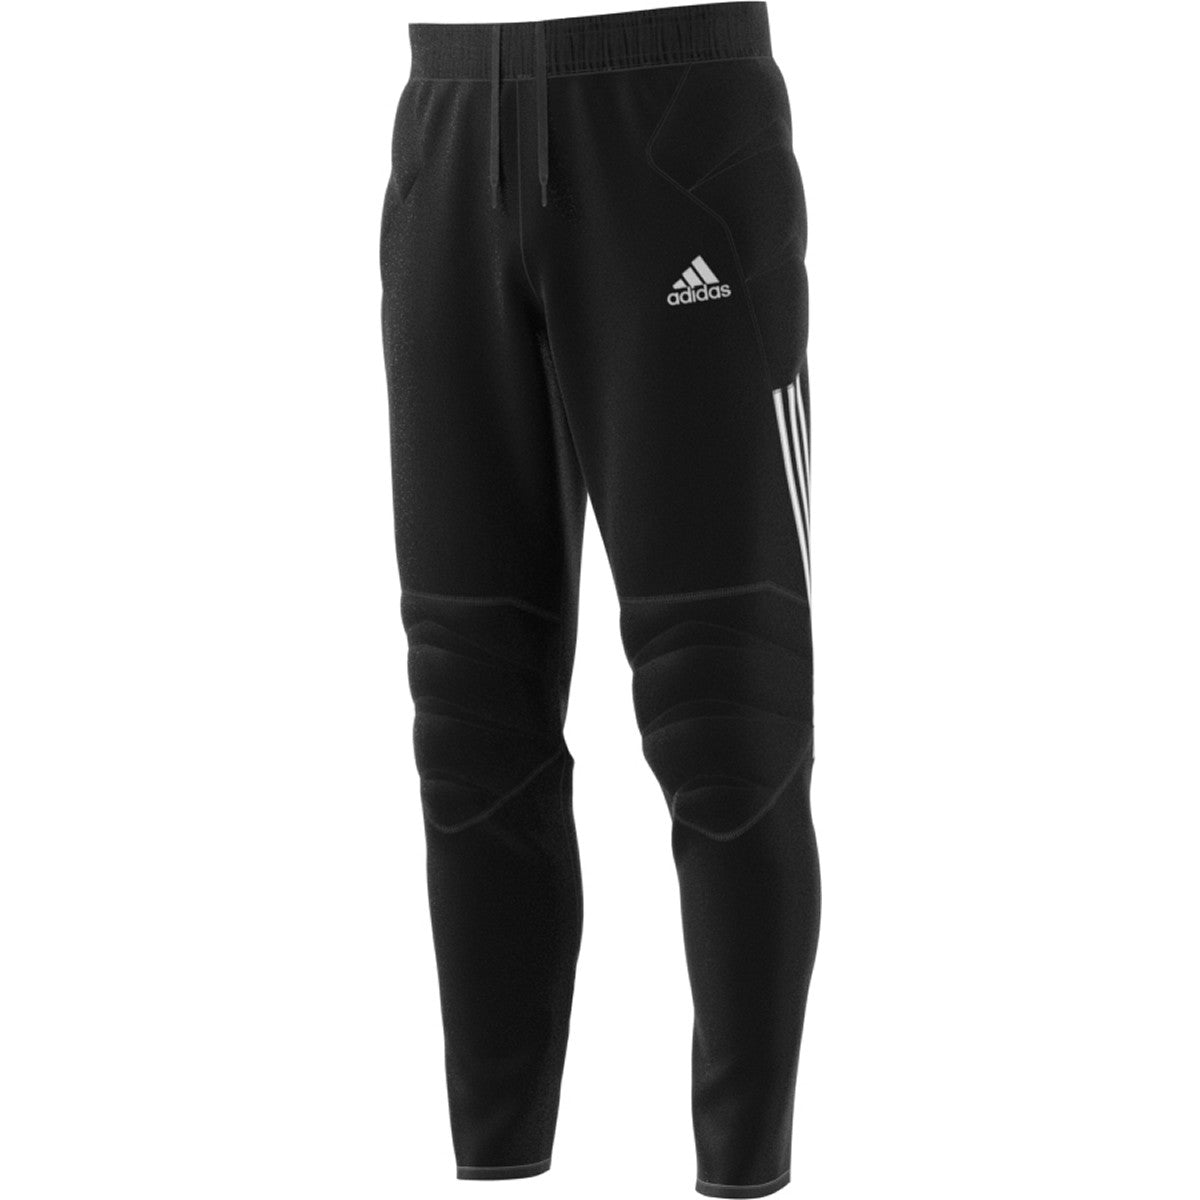 adidas Men's Tierro GK Pants | FT1455 Pants Adidas Adult Small Black 